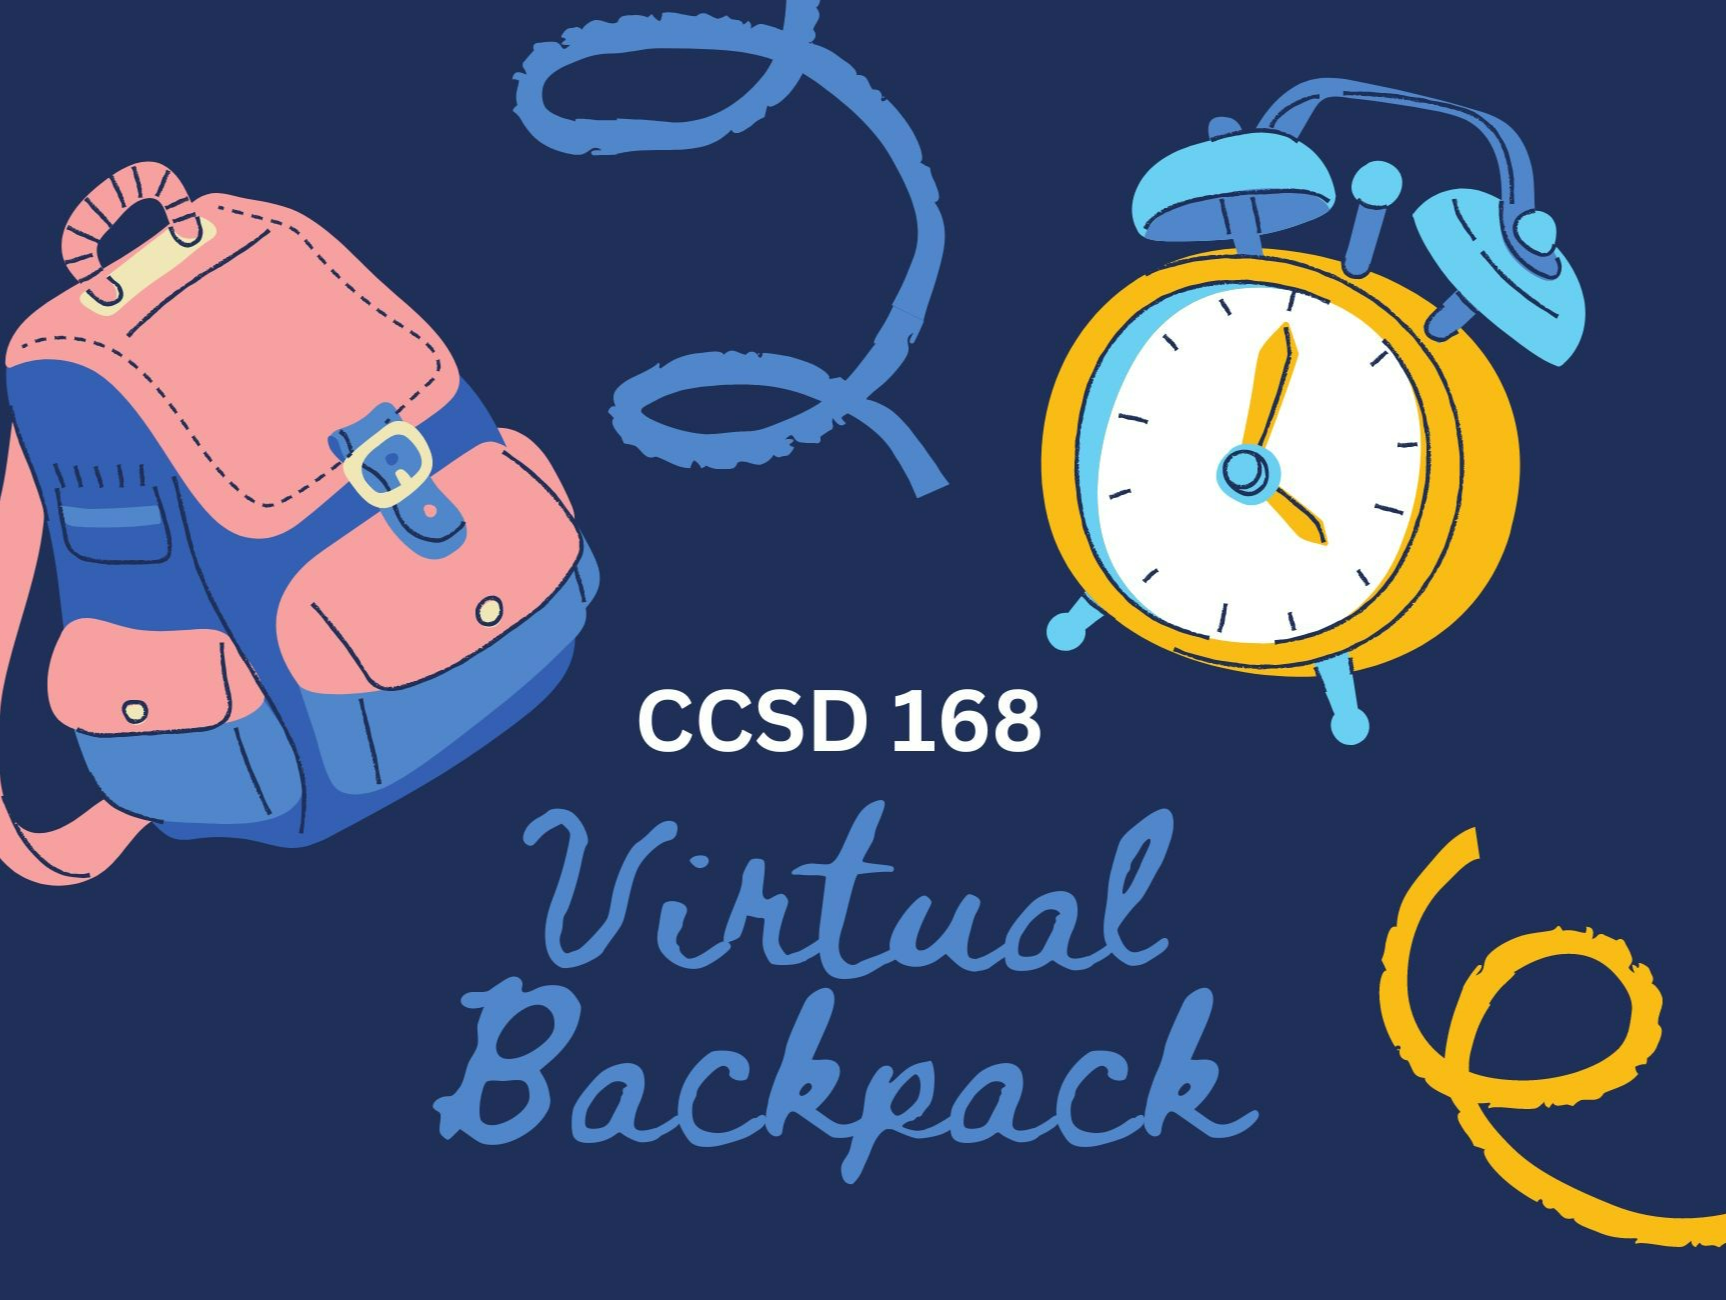 CCSD 168 Virtual Backpack